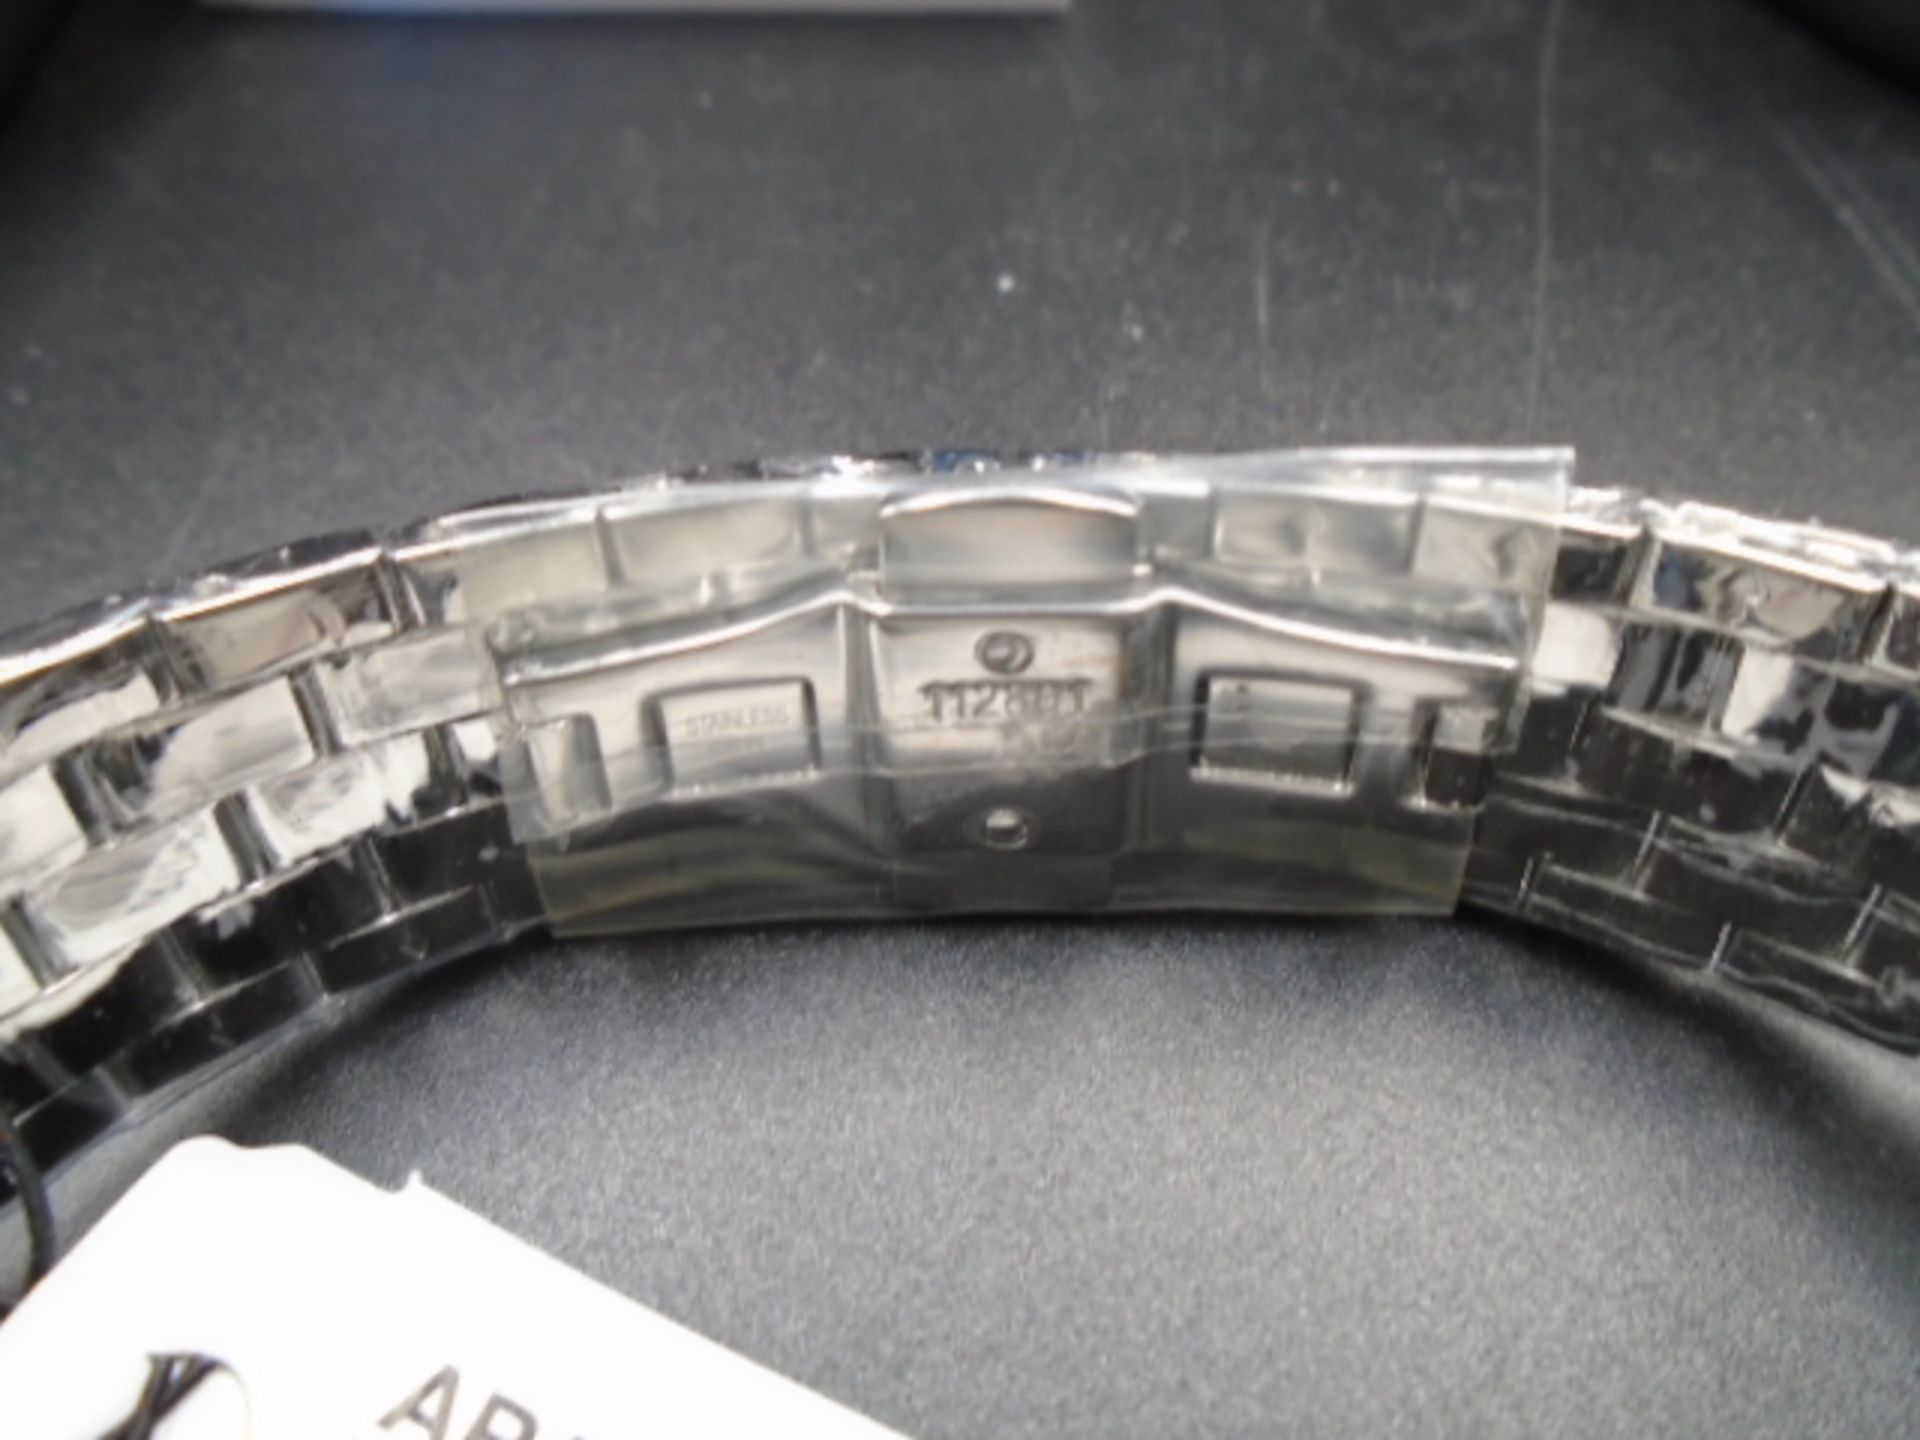 2 Emporio Armani watches - mens dino slim steel bracelet model AR 1745 and ladies quartz watch - Image 8 of 11